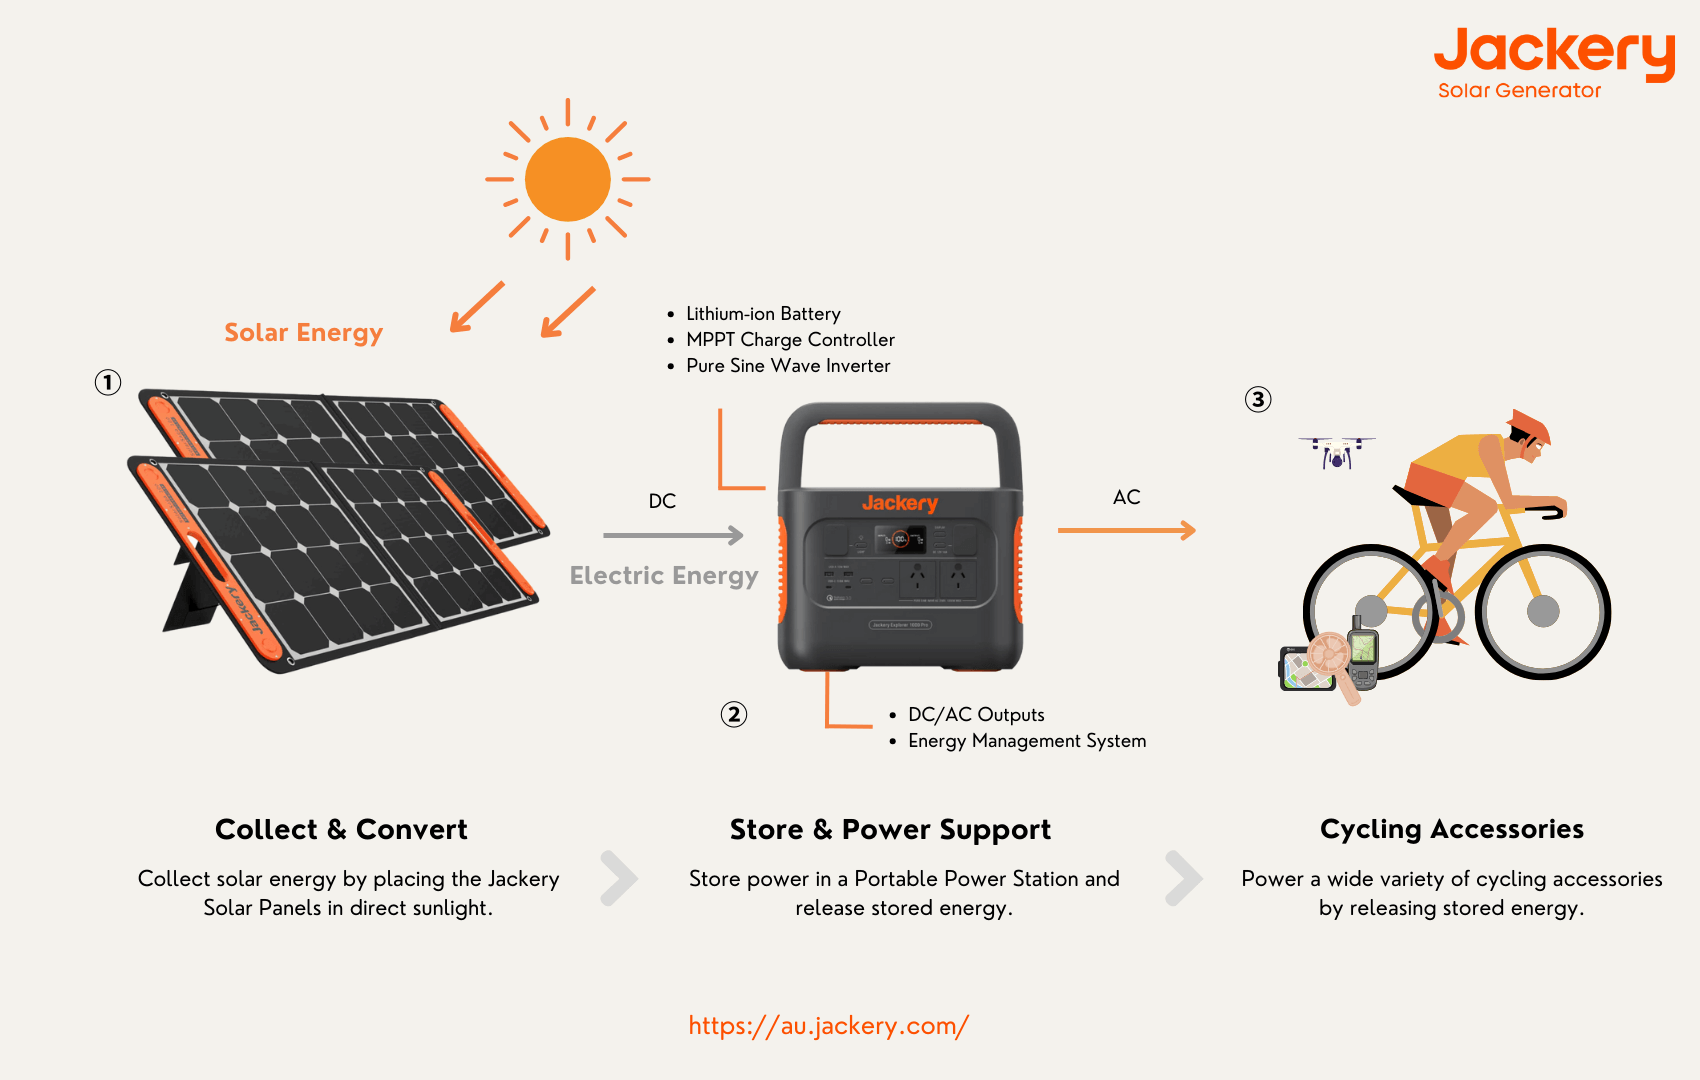 jackery solar generator for cycling